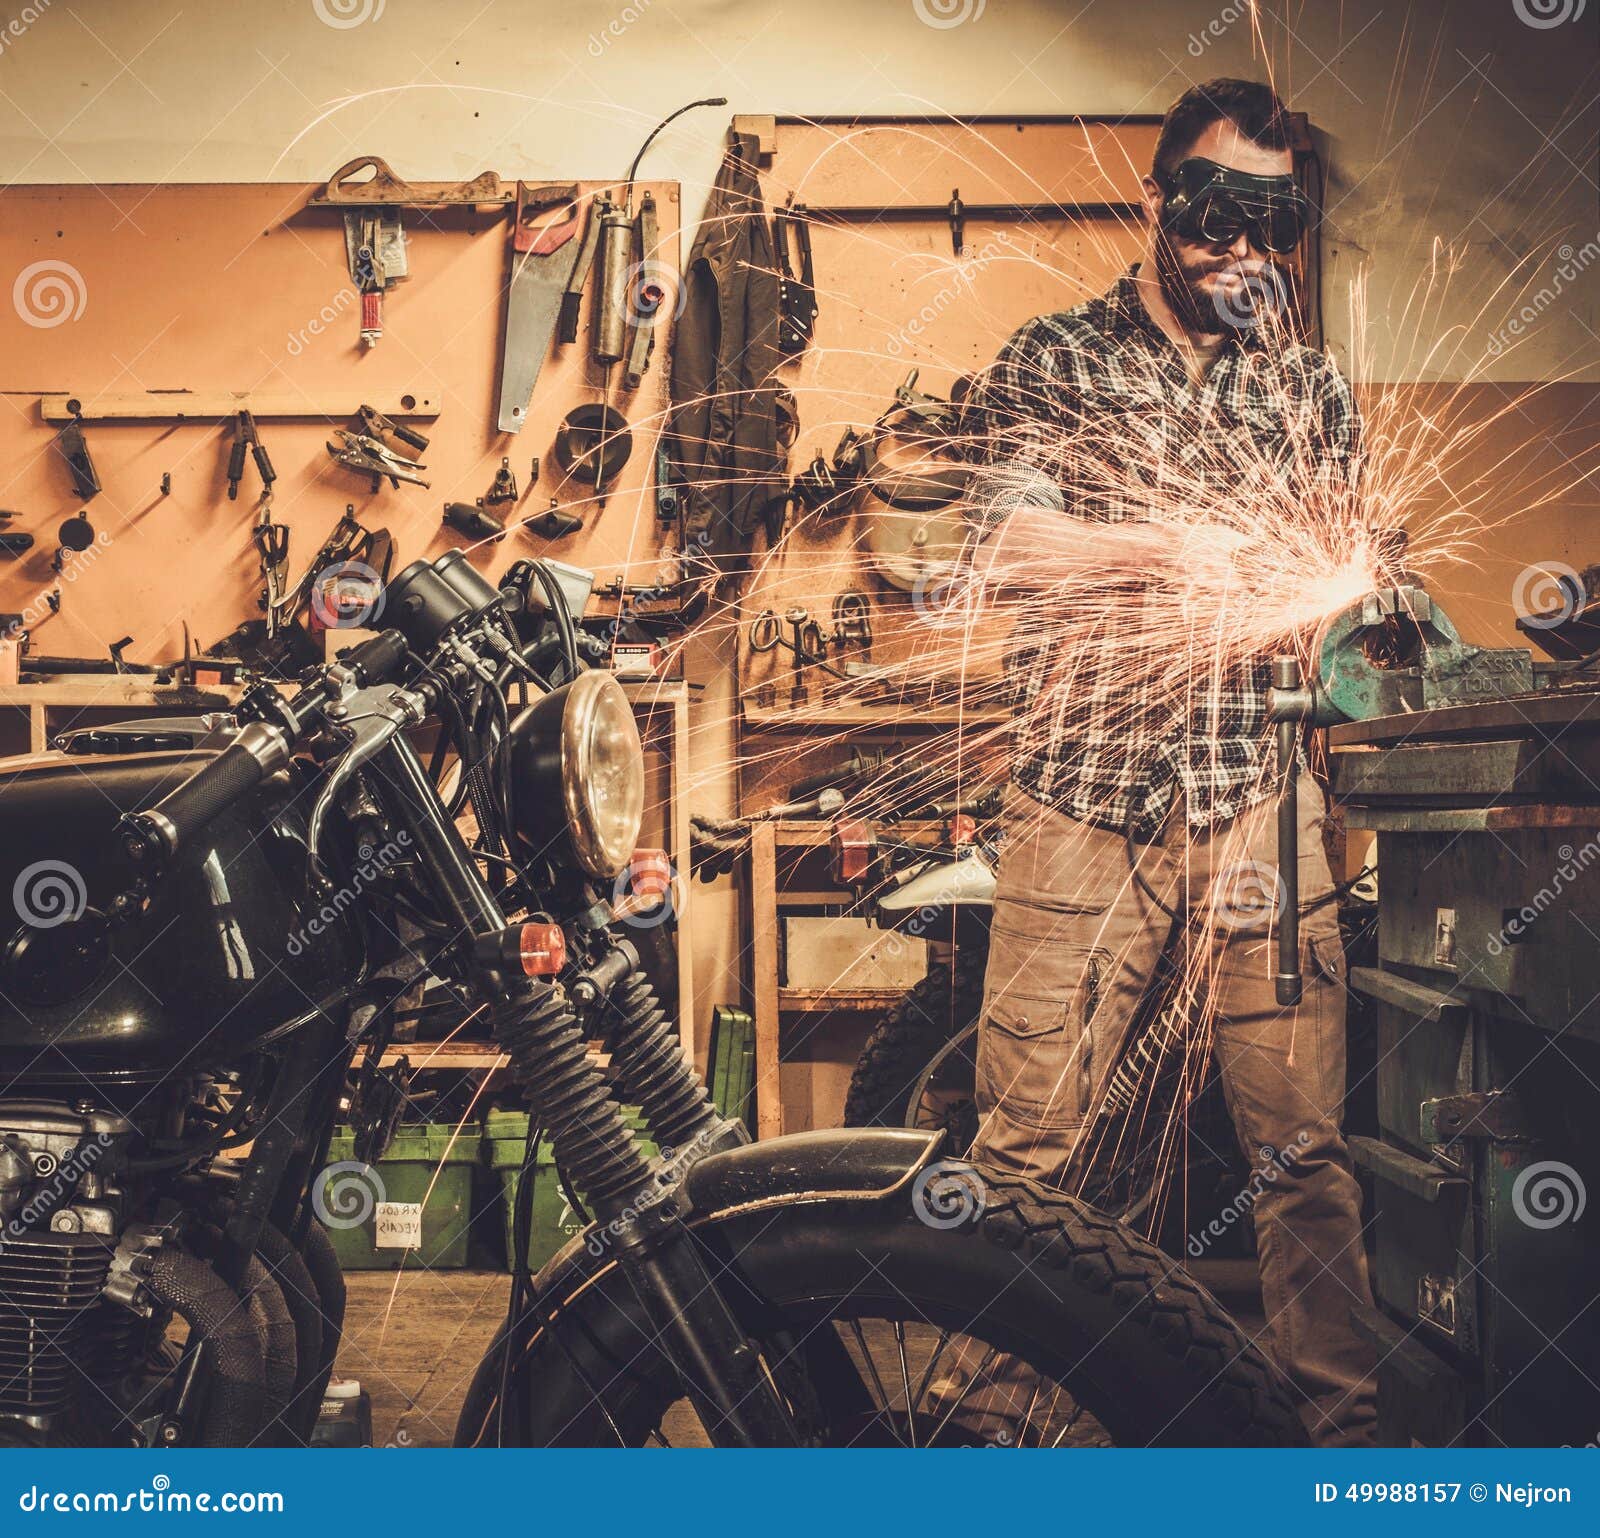 Custom motorcycle fabrication jobs